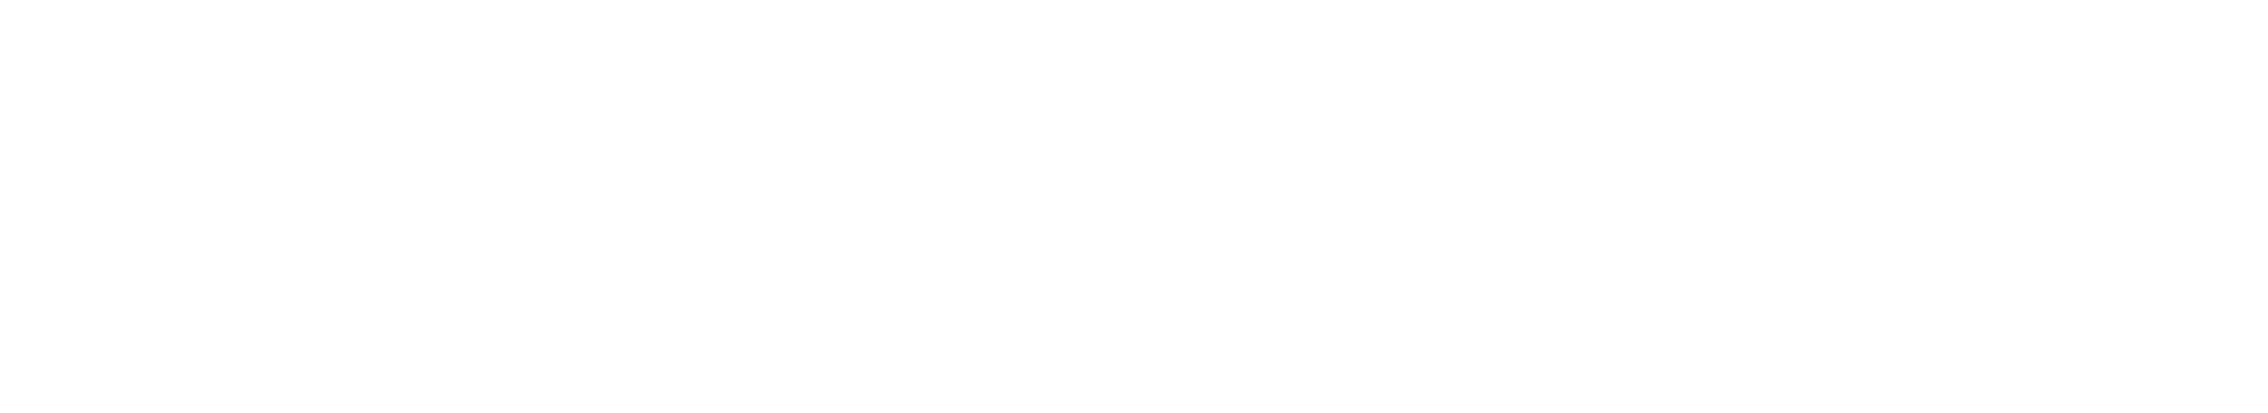 Fleet Market Logo